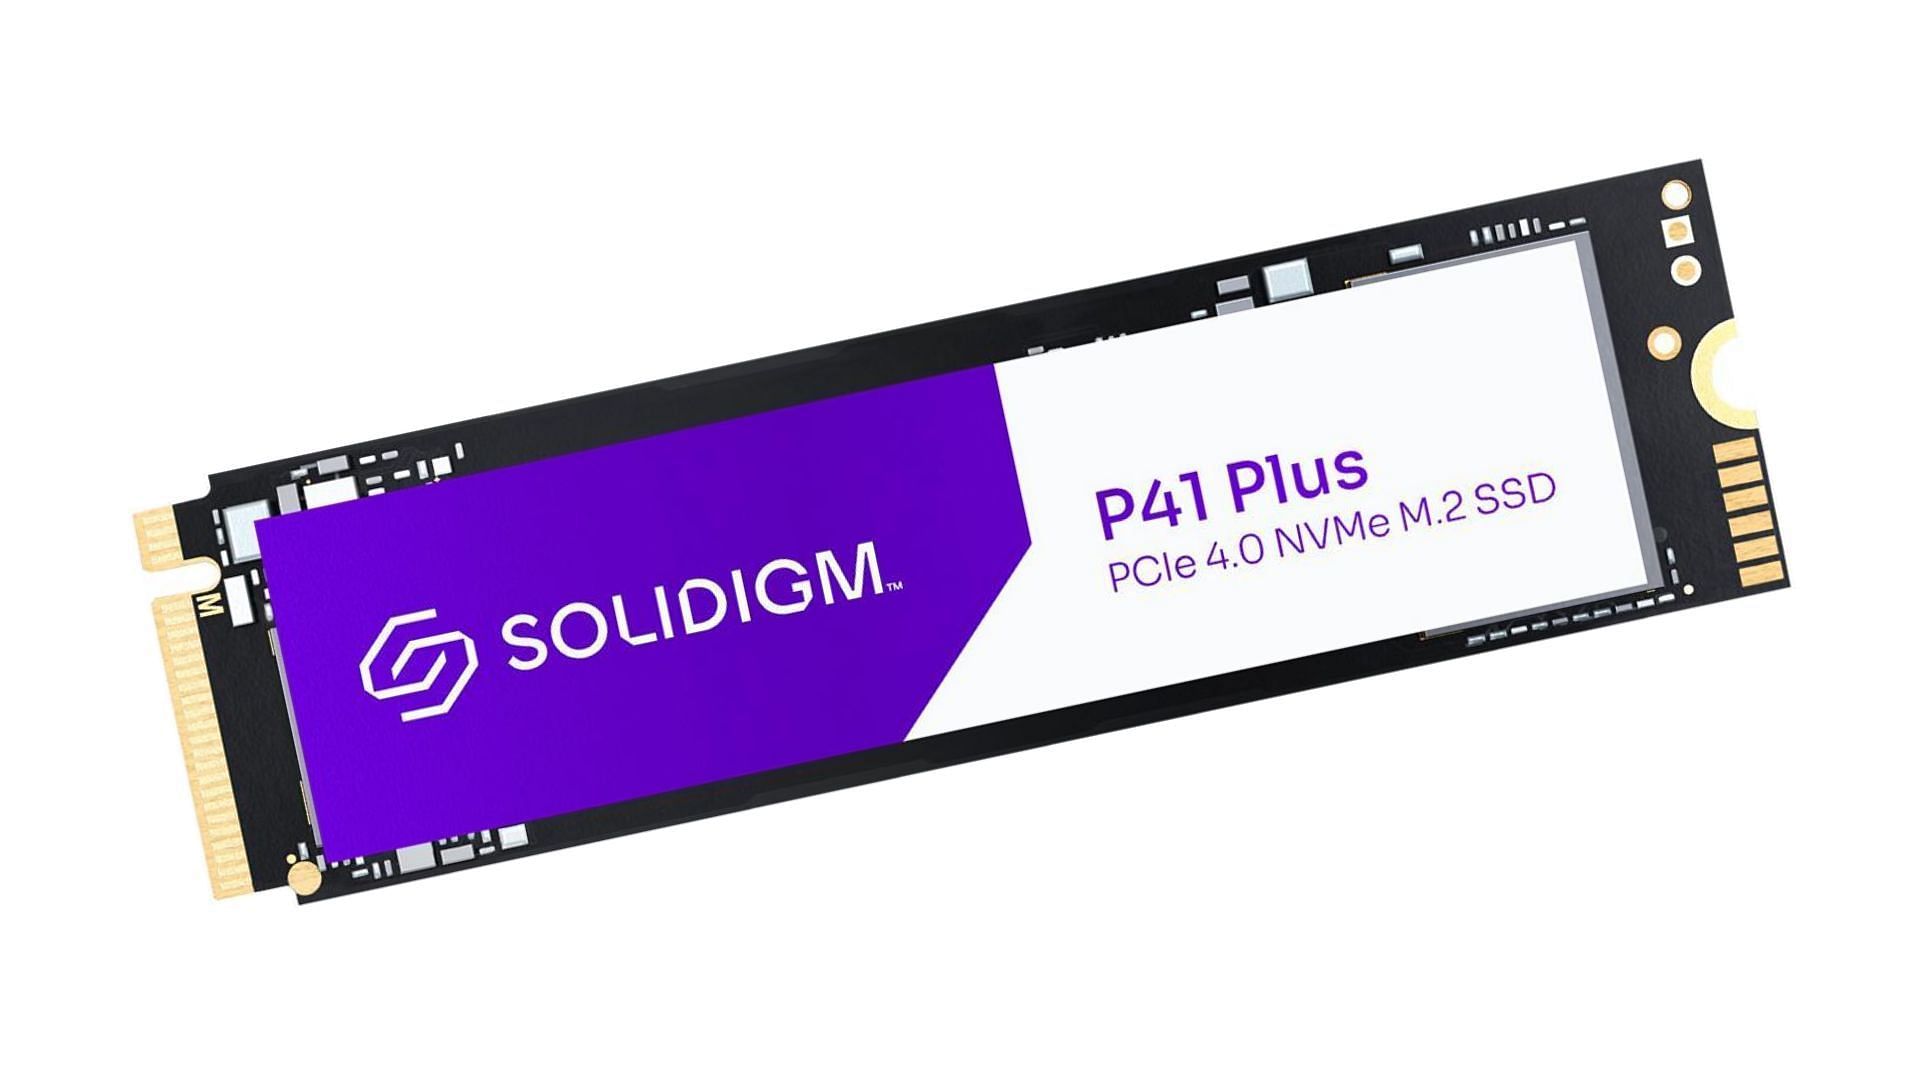 The Solidigm P41 Plus Series 1TB PCIe M.2 Gen 3 x4 (Image via Newegg)